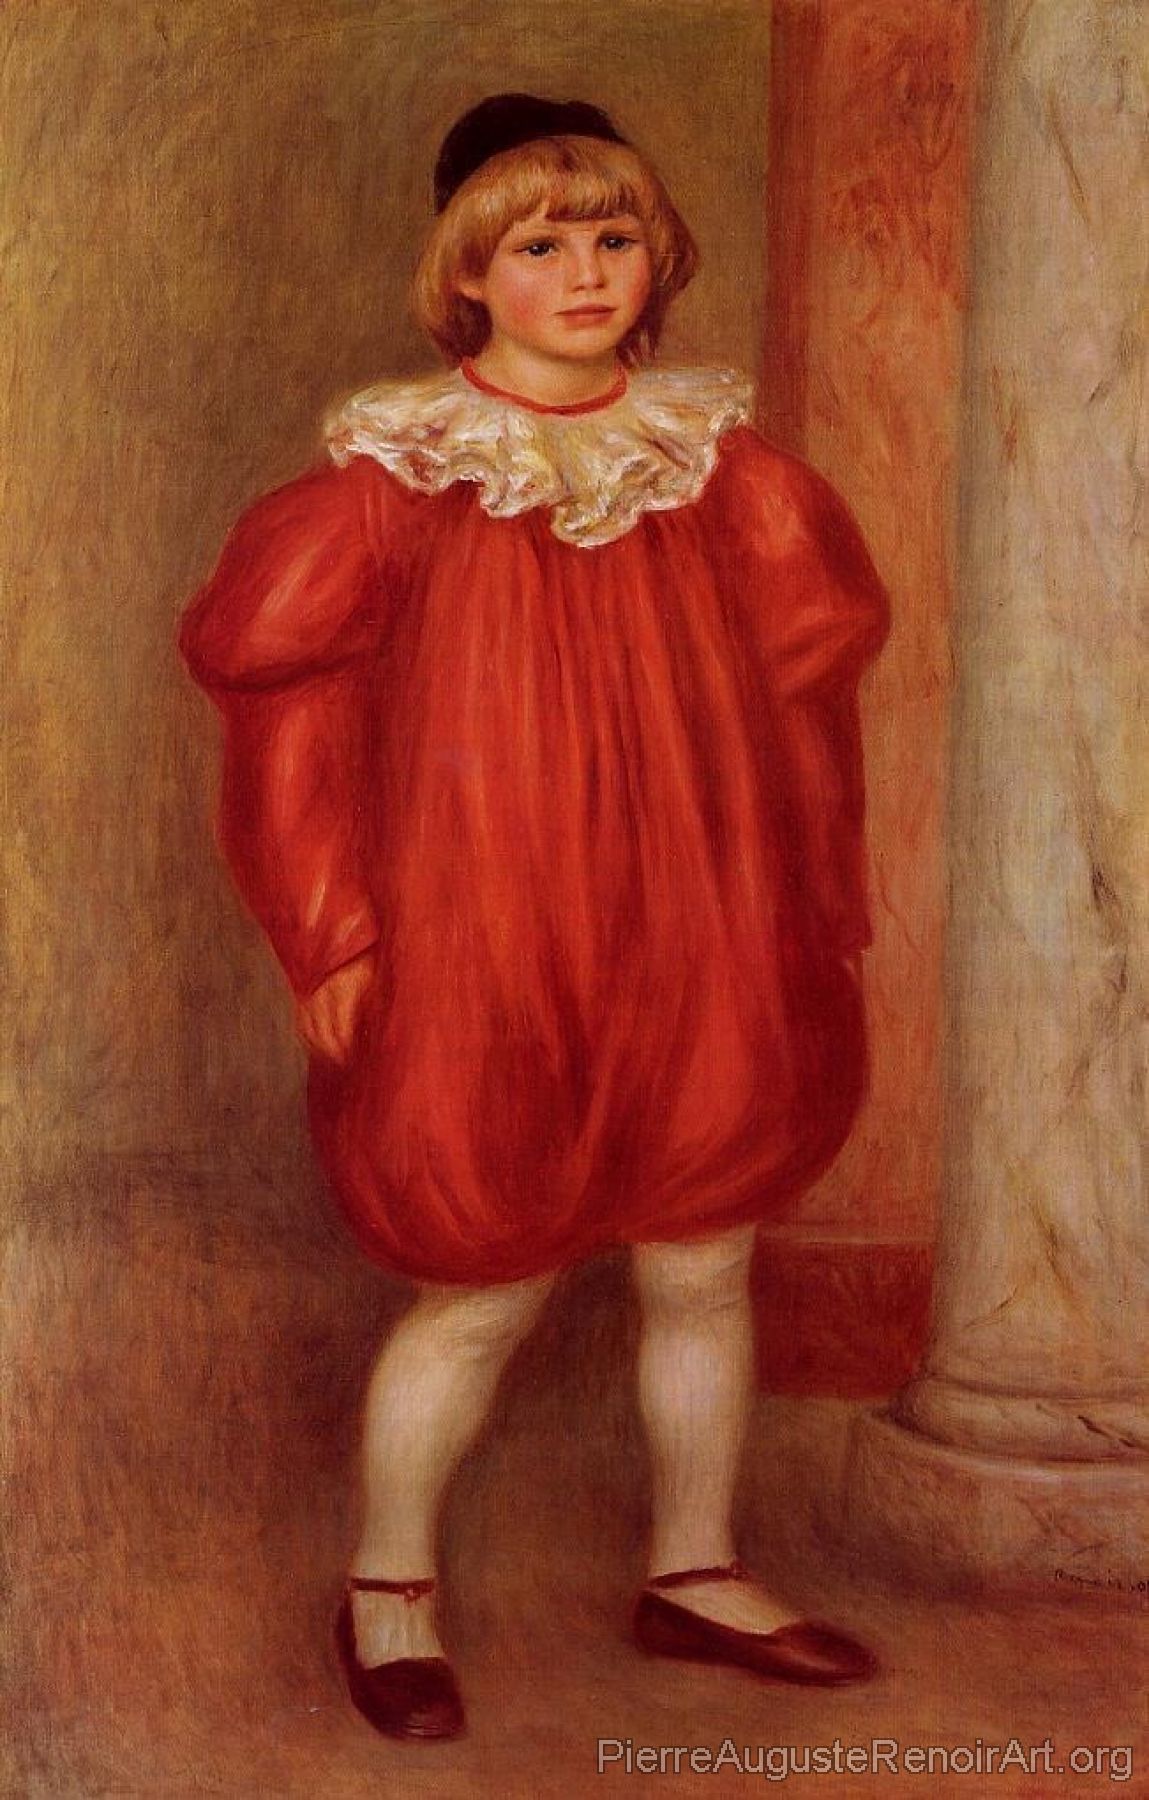 Claude Renoir in Clown Costume